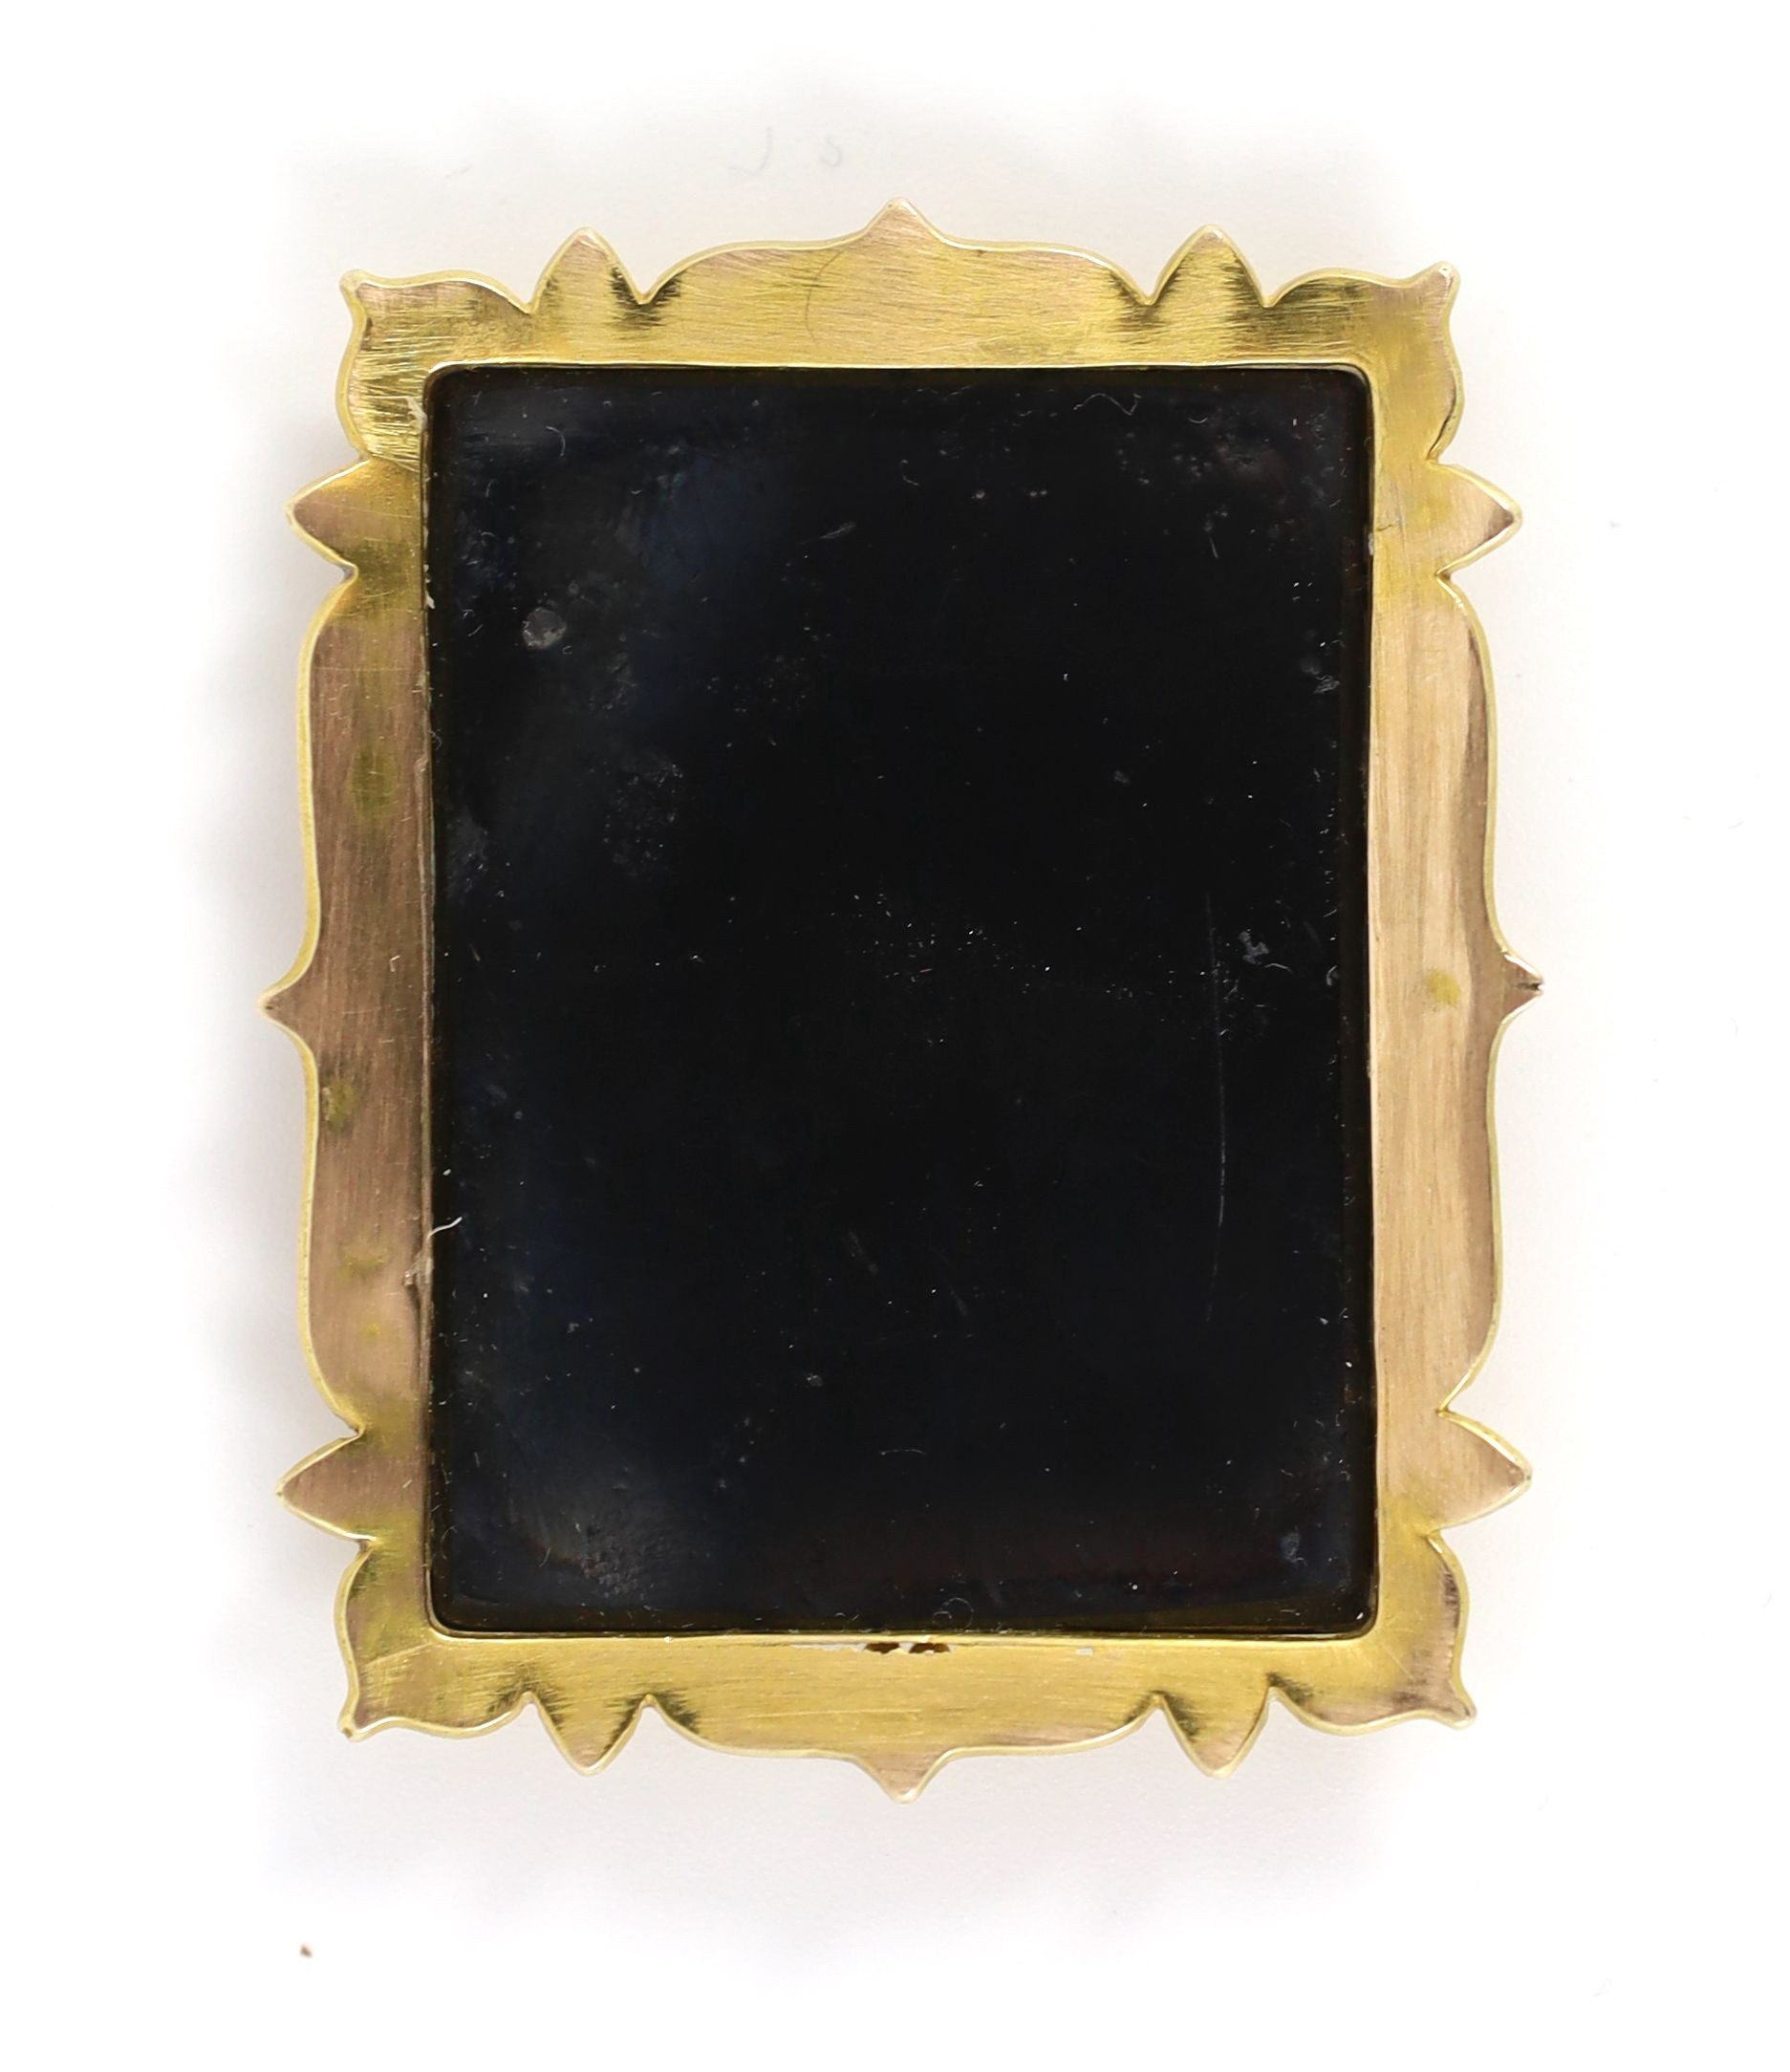 A 19th century Italian gold mounted micro-mosaic plaque, 5.5 x 4.25cm